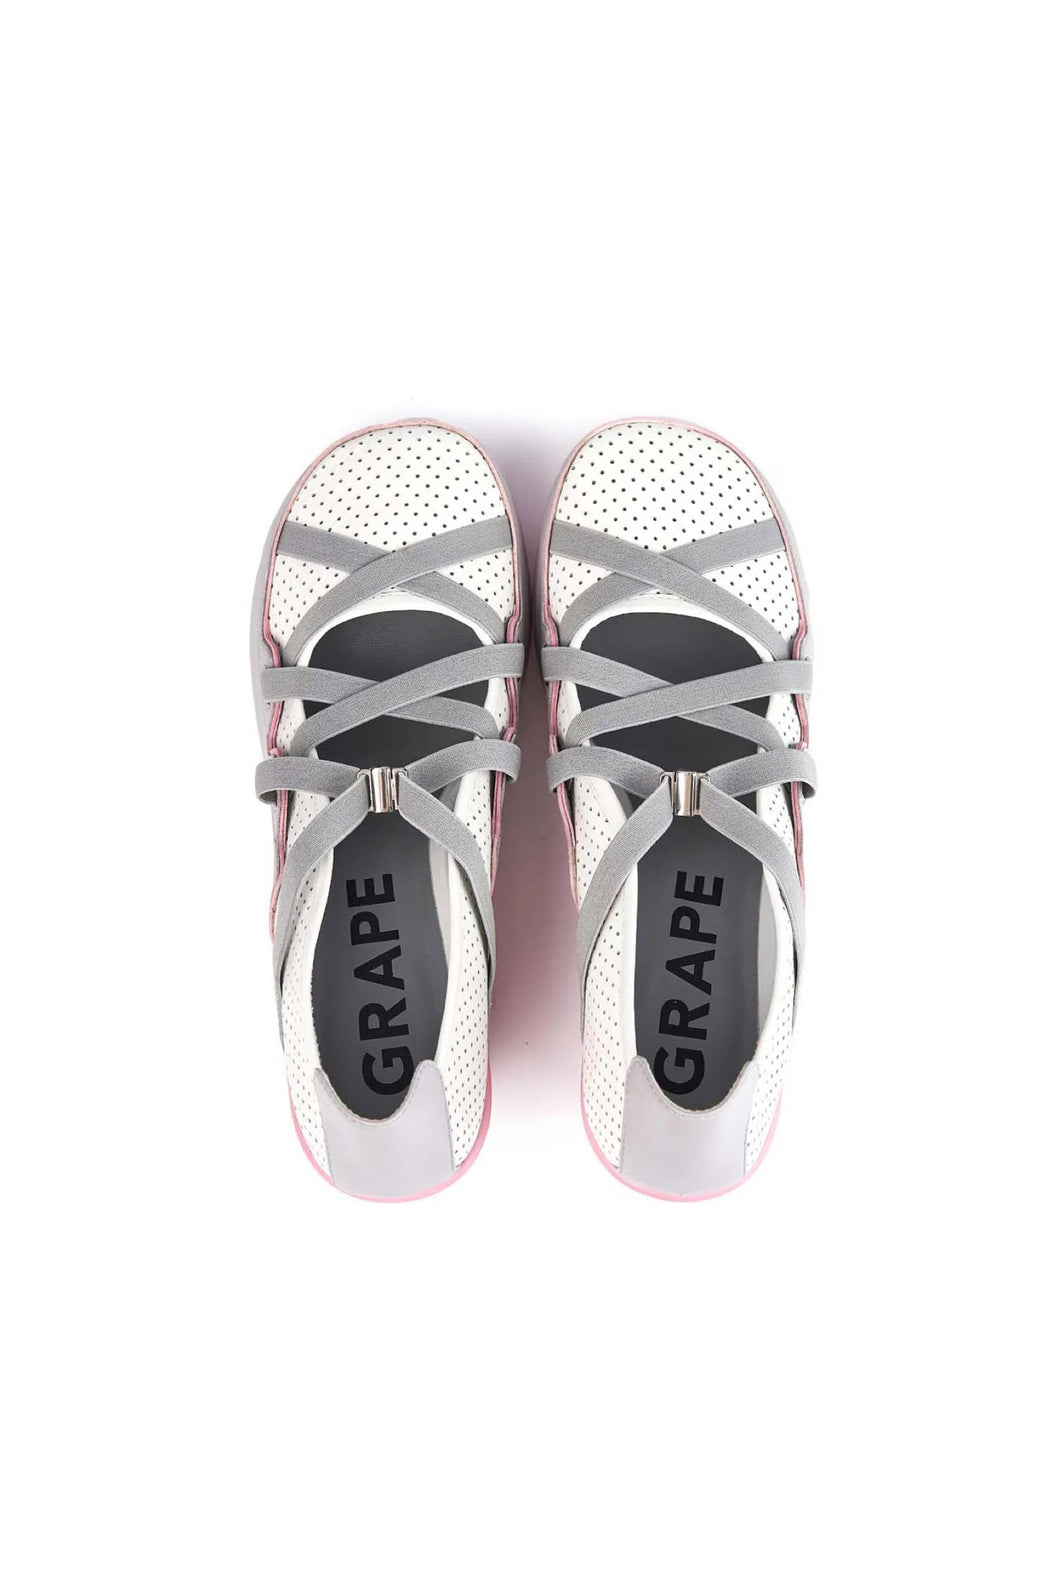 White Pink Strappy High-Heels